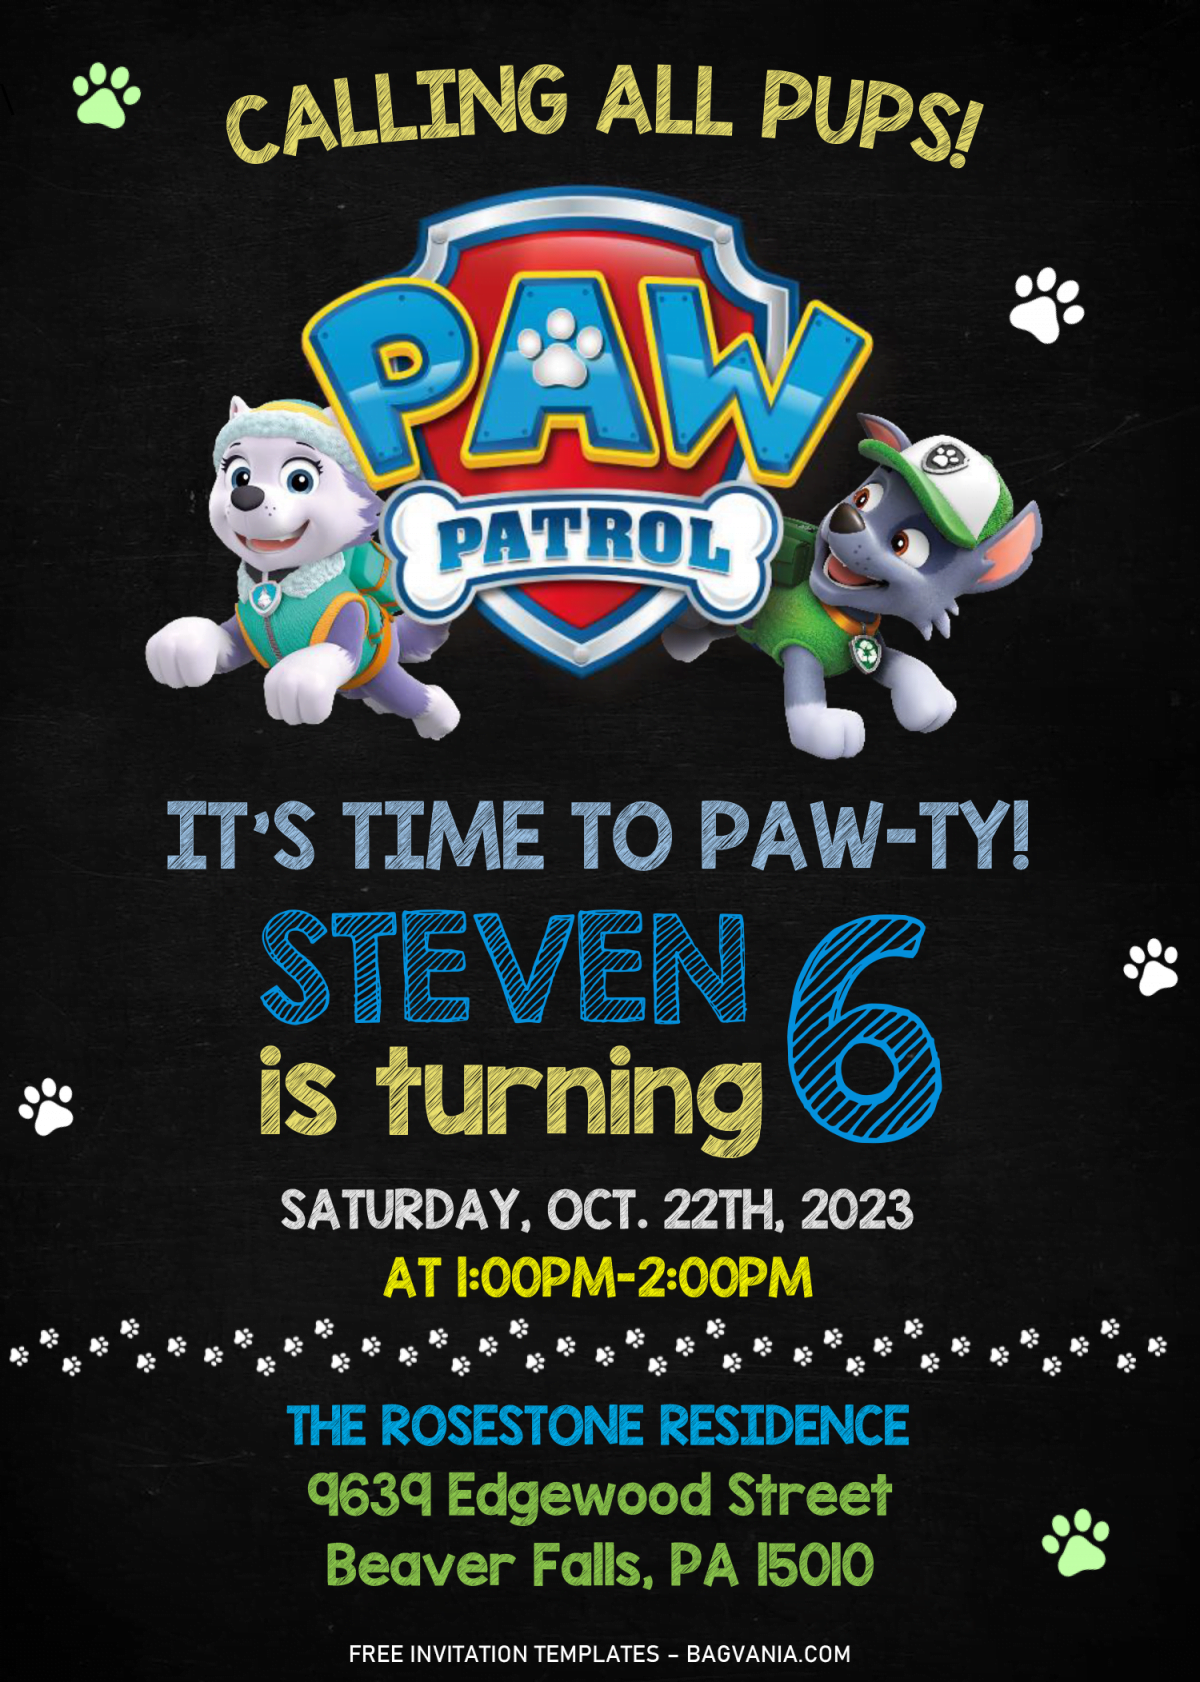 PAW Patrol Invitation Templates - Editable With Microsoft Word and has paw patrol logo